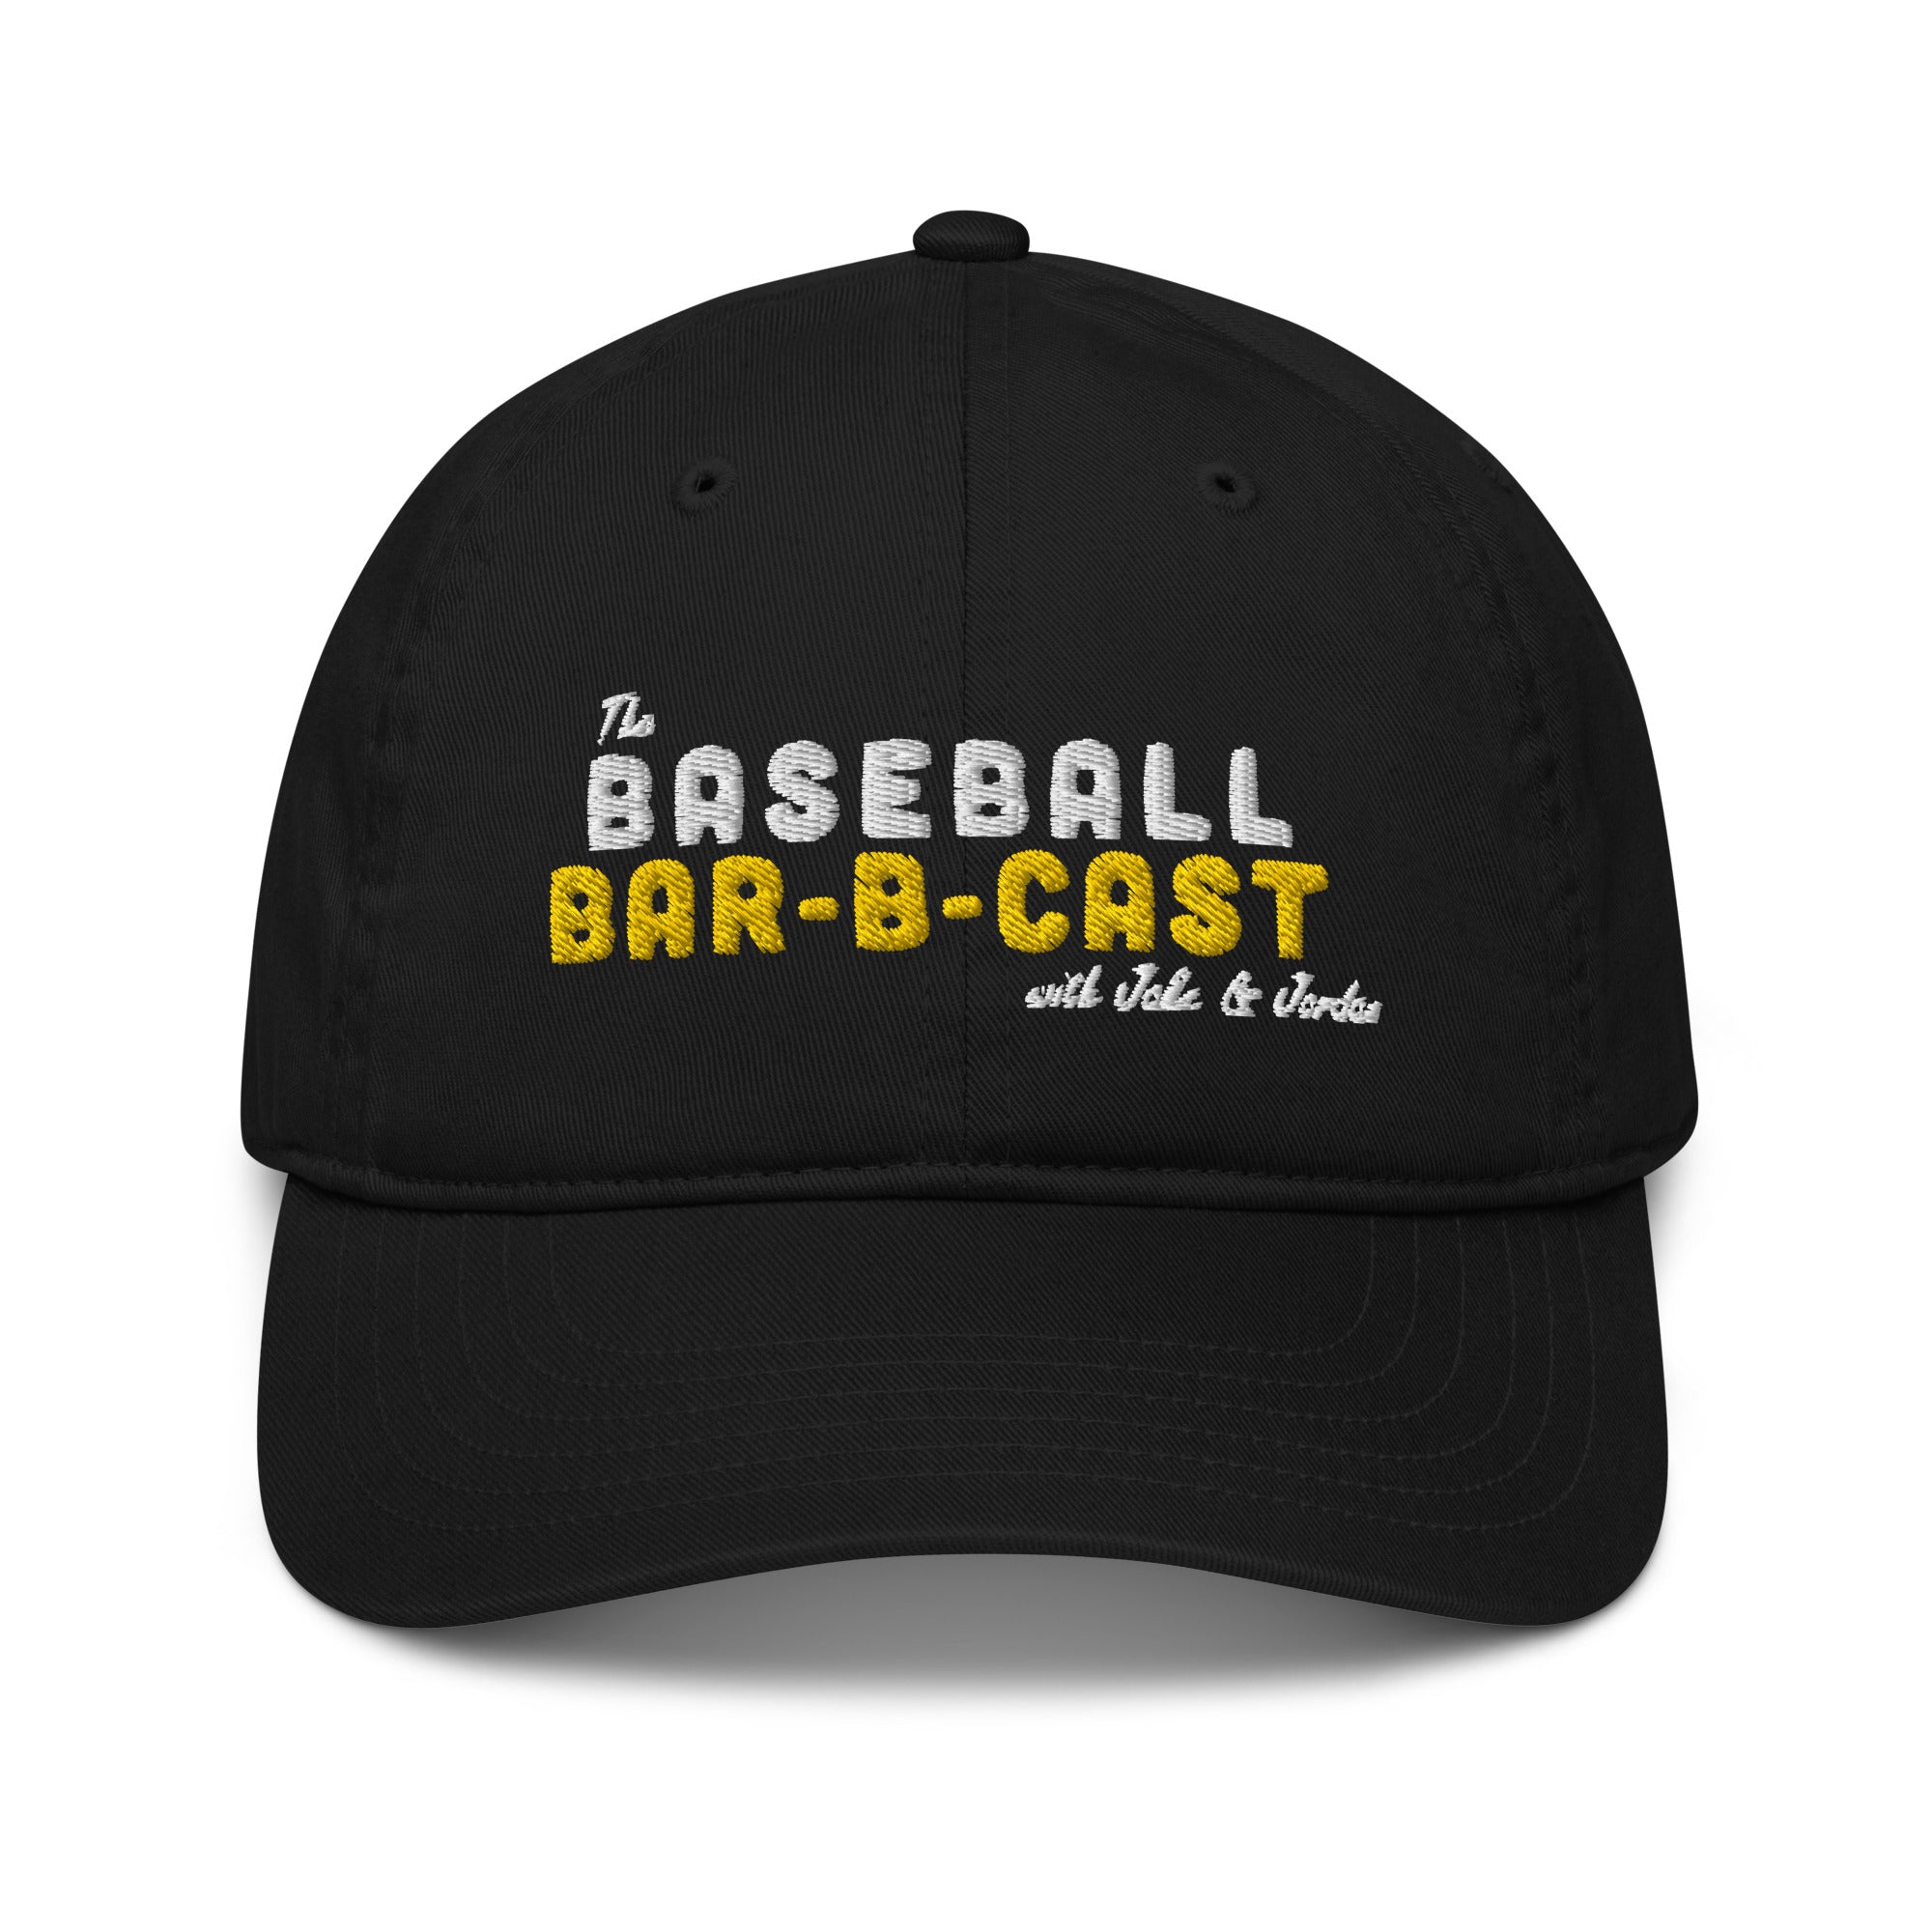 Baseball Bar-B-Cast: Title Cap (Black)